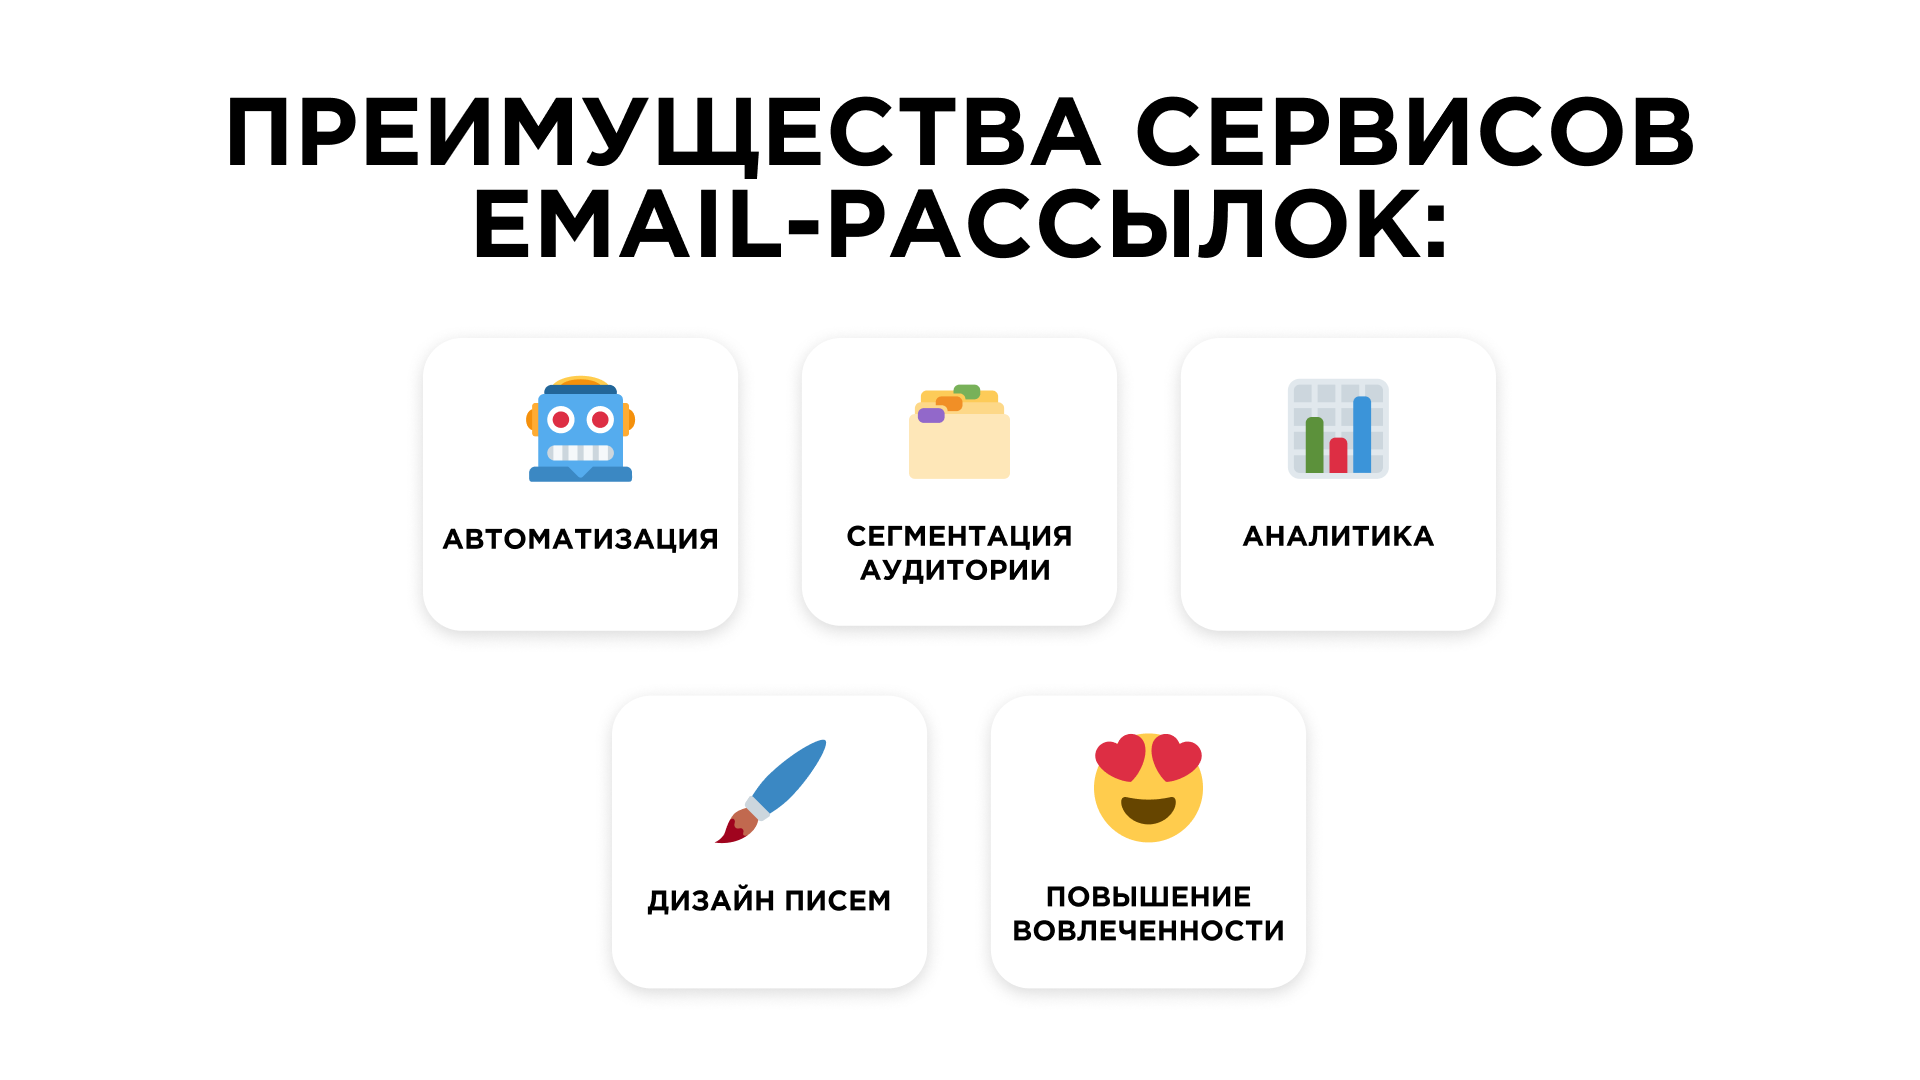 Преимущества сервисов email-рассылок